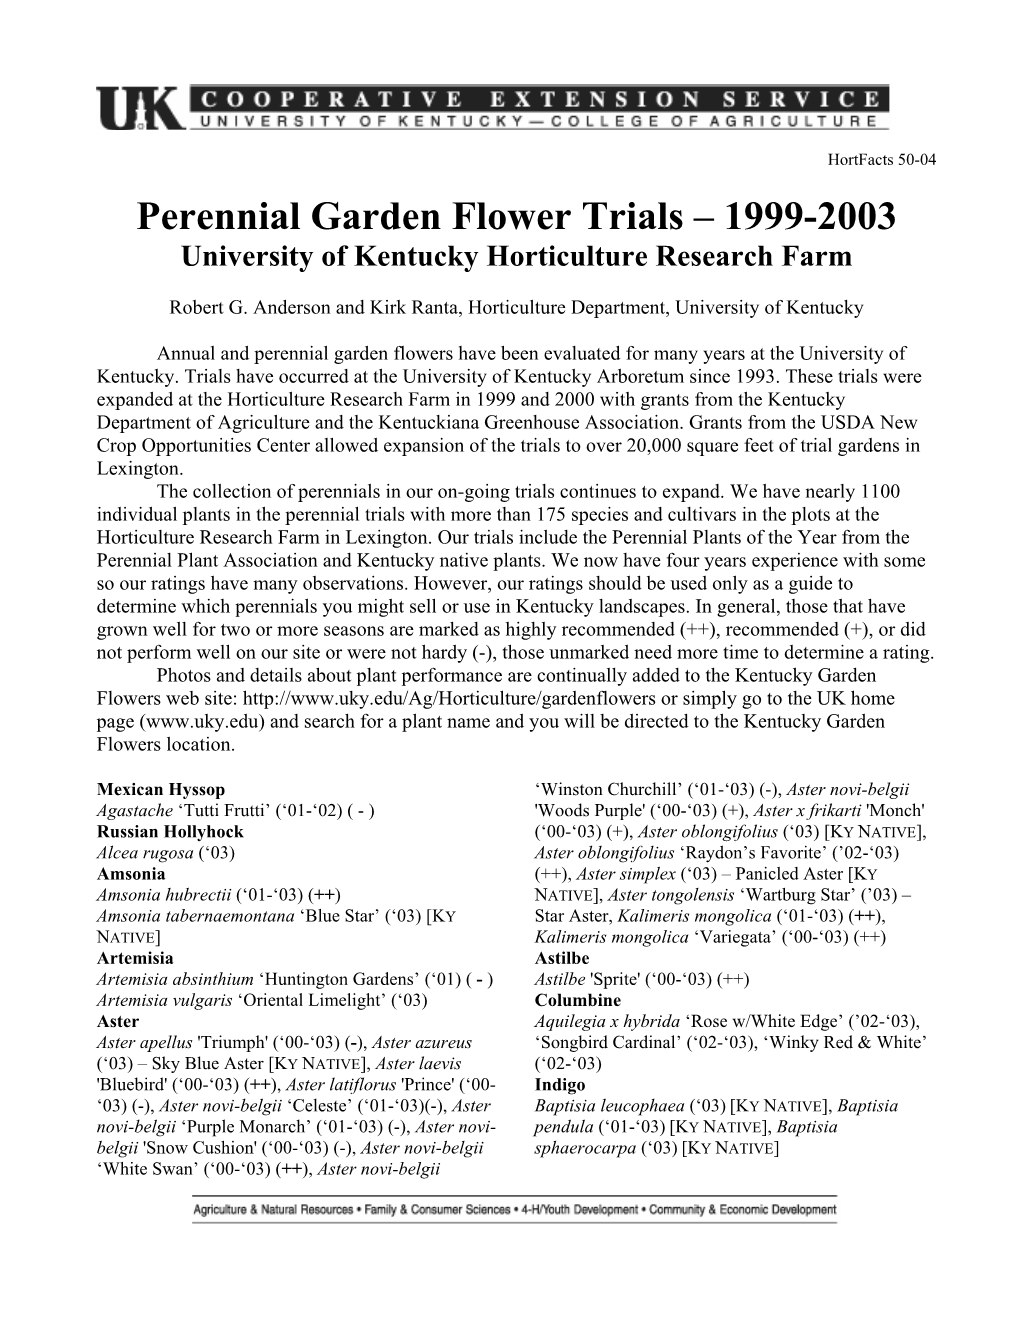 Perennial Garden Flower Trials 1999-2003